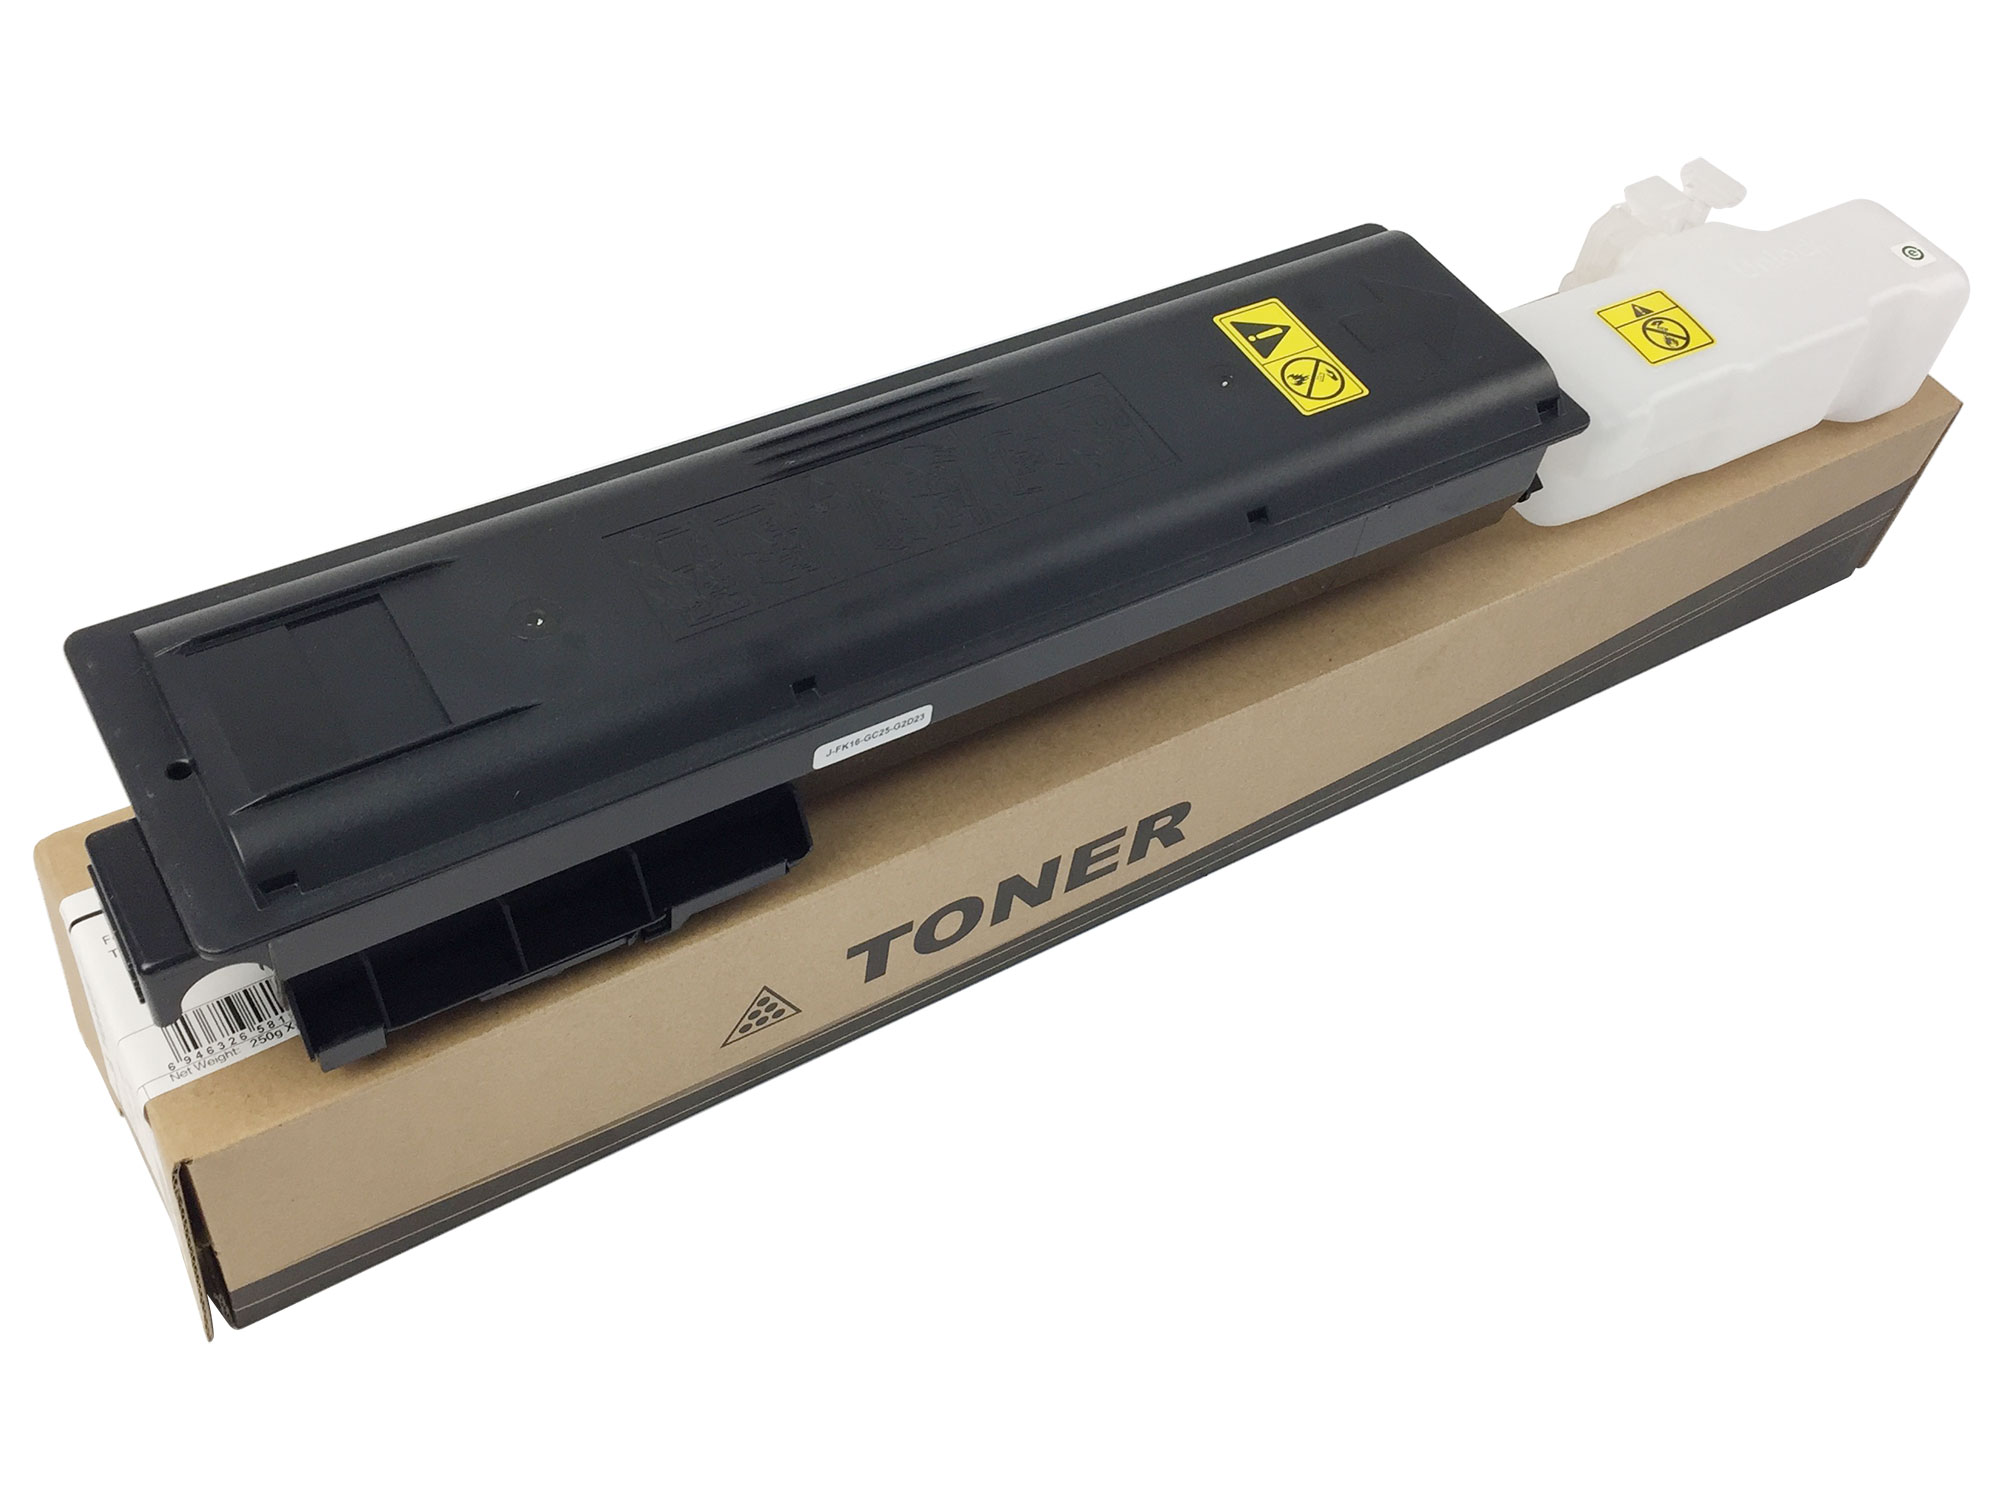 TK-4109 Toner Cartridge for Kyocera TASKalfa 1800